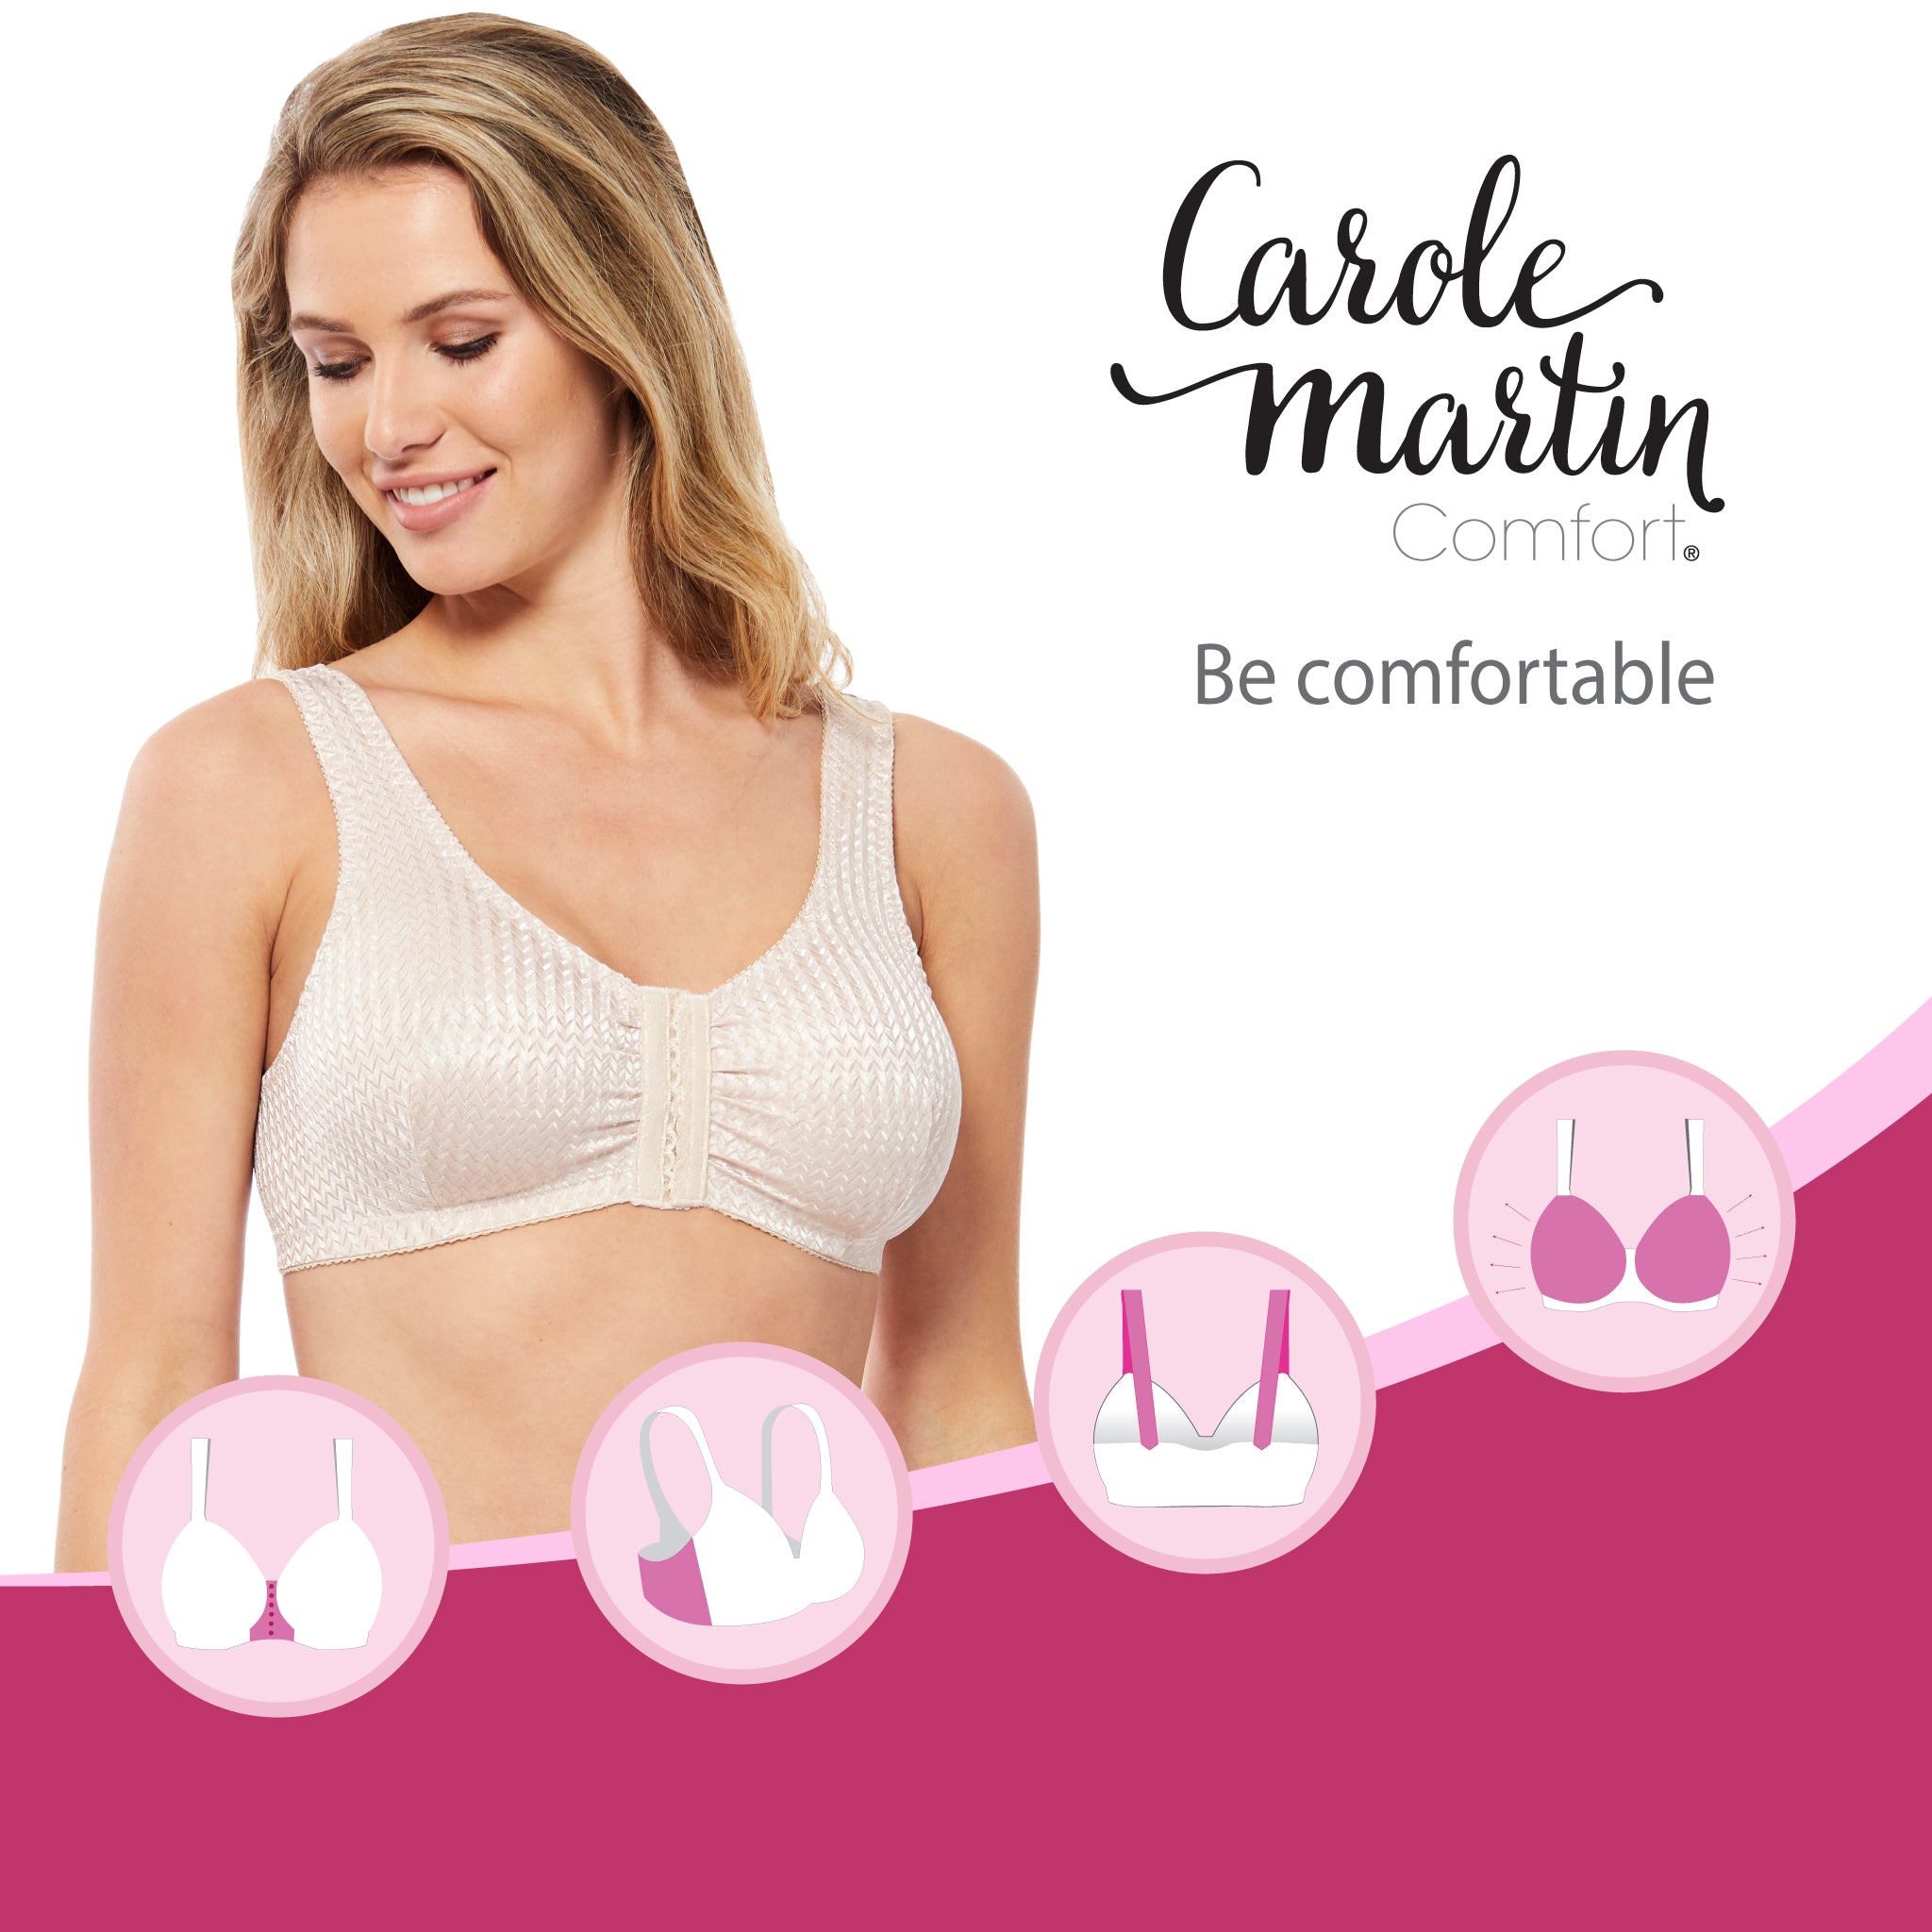 Where to Buy Carole Martin® Comfort Bras – Carole Martin USA / Nuvatek  Distribution Corp